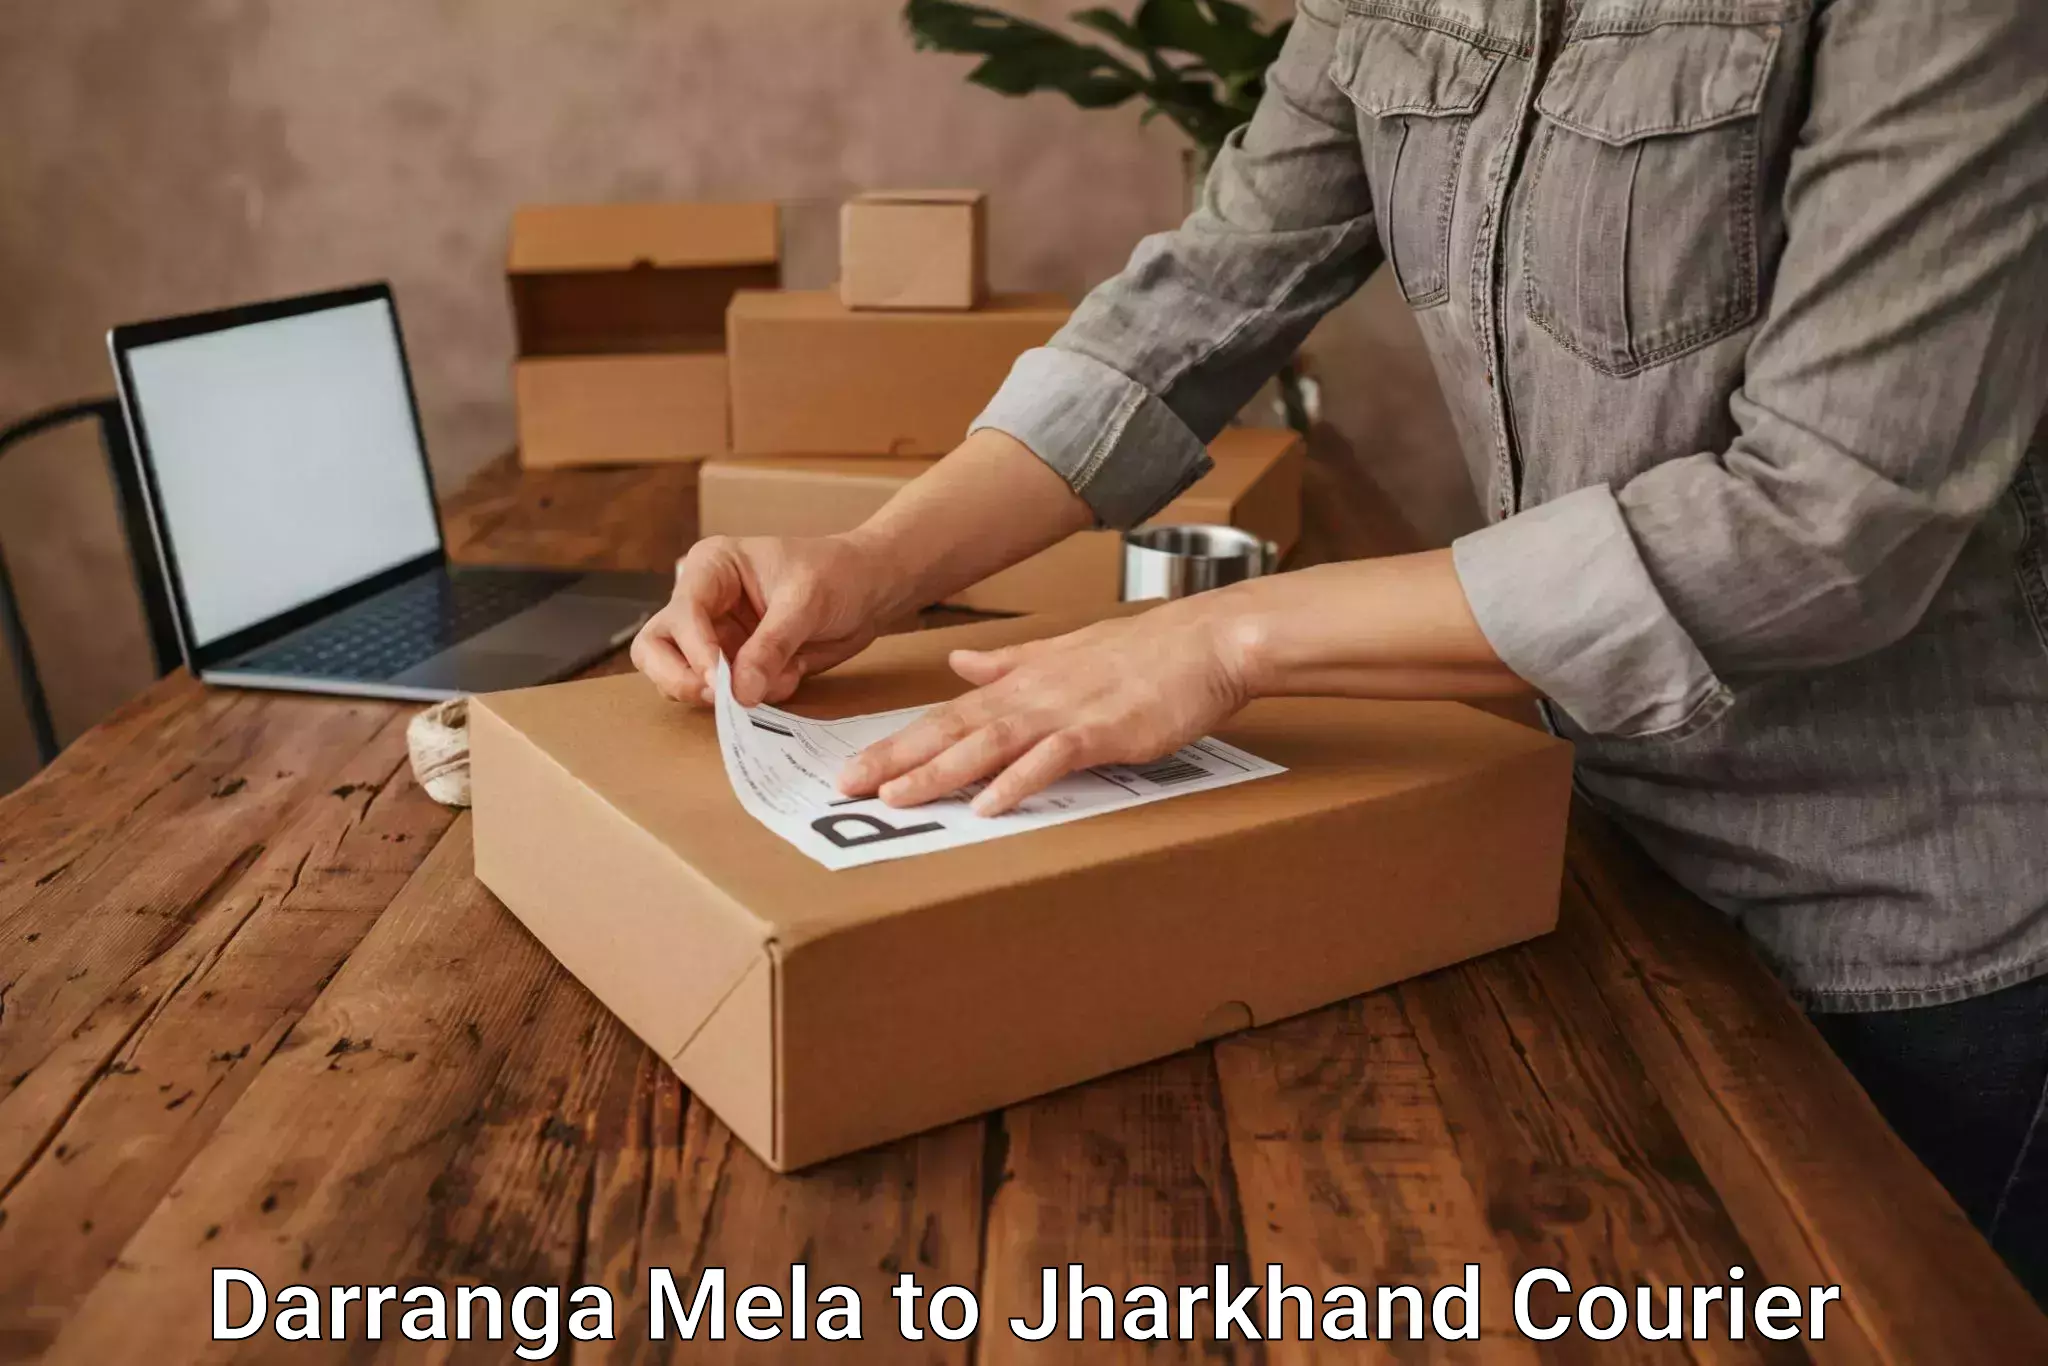 Ground shipping Darranga Mela to Jharkhand